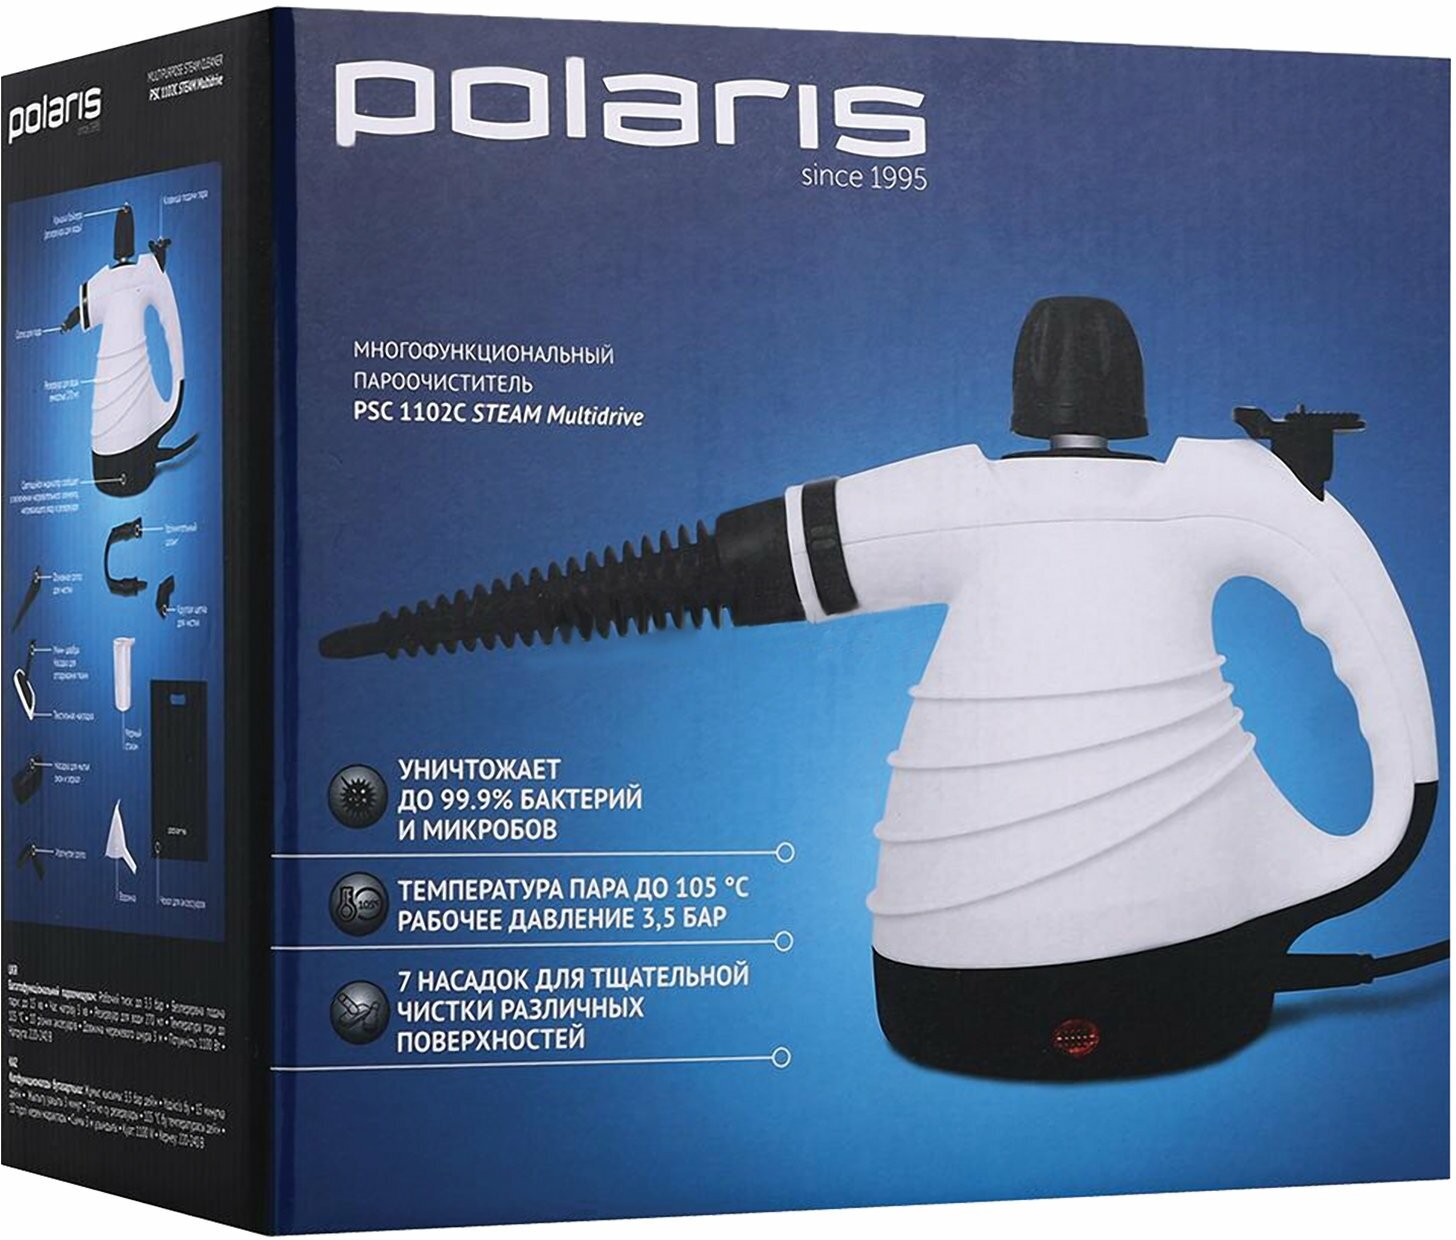 Polaris psc 1102 c steam multidrive фото 6